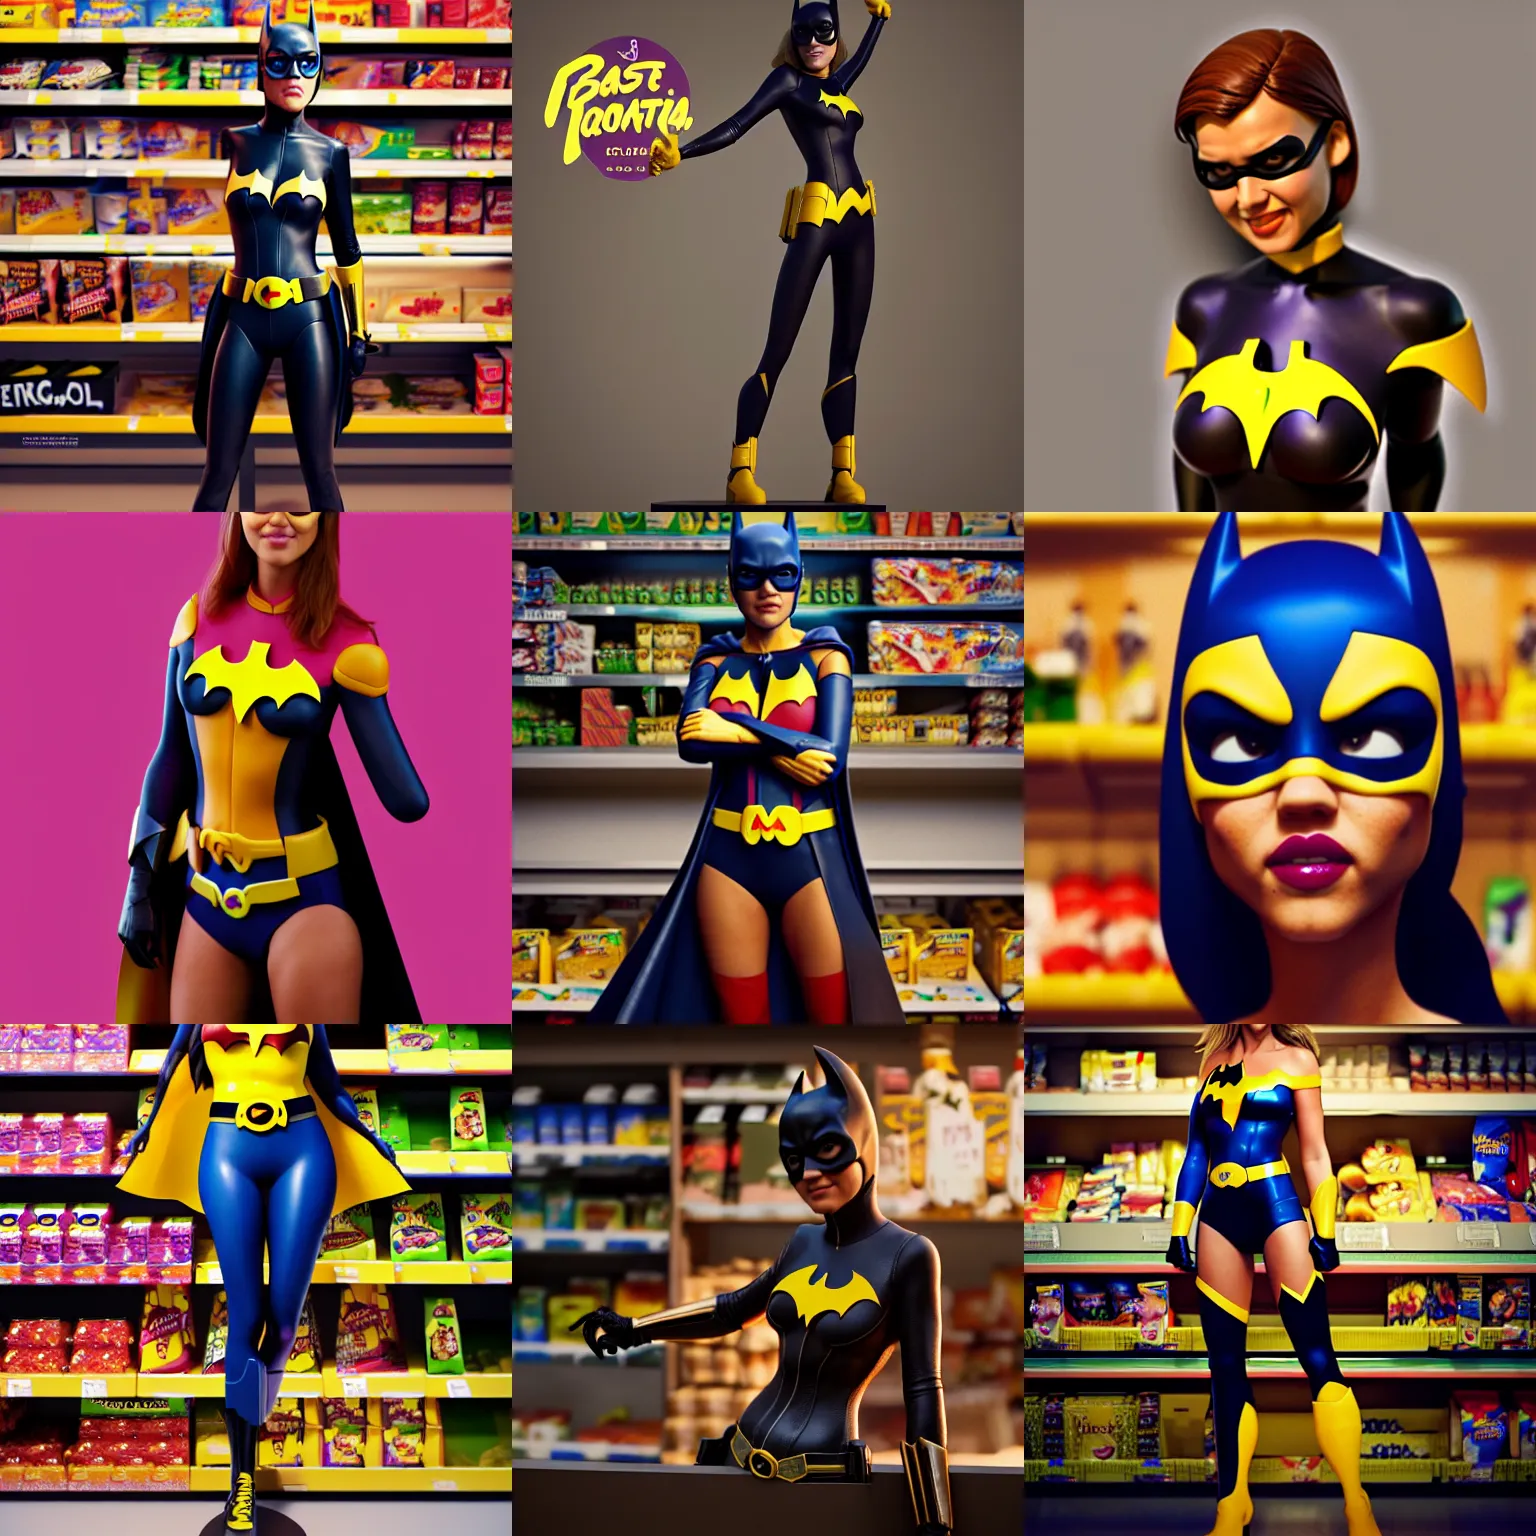 Prompt: jessica alba as batgirl standing atop a grocery display shelf : : octane render, artstation, weta, pixar, disney, soft, decadent, lustrous, polished : :